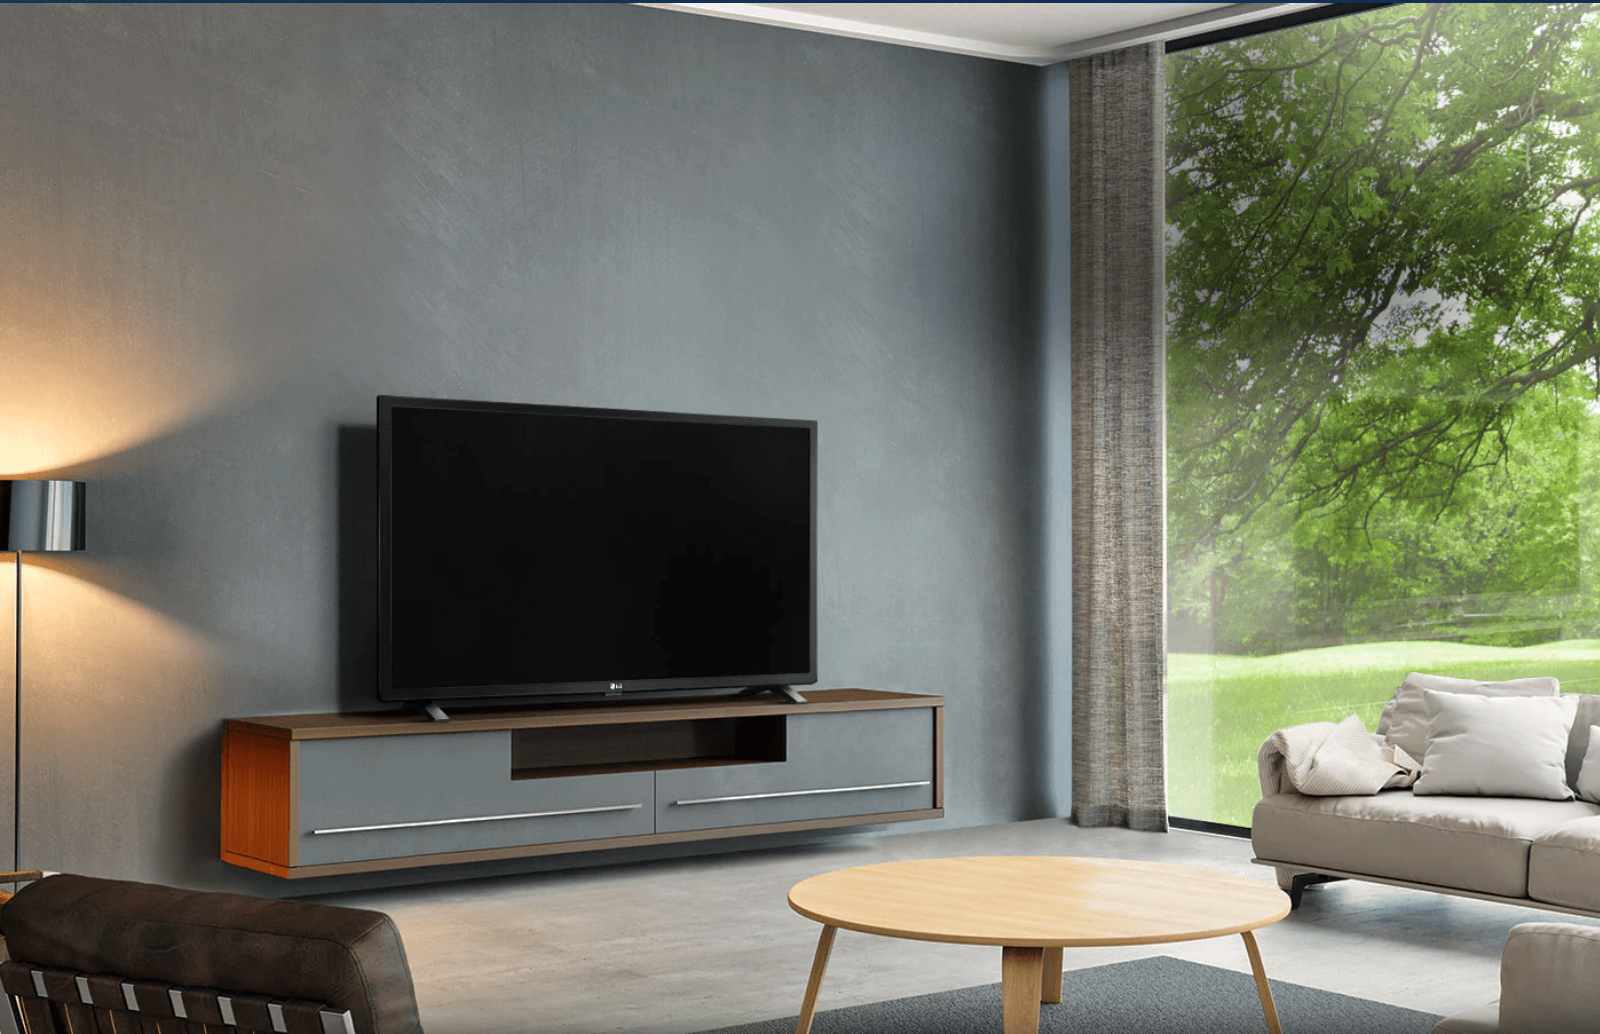 LG Smart LED TV design